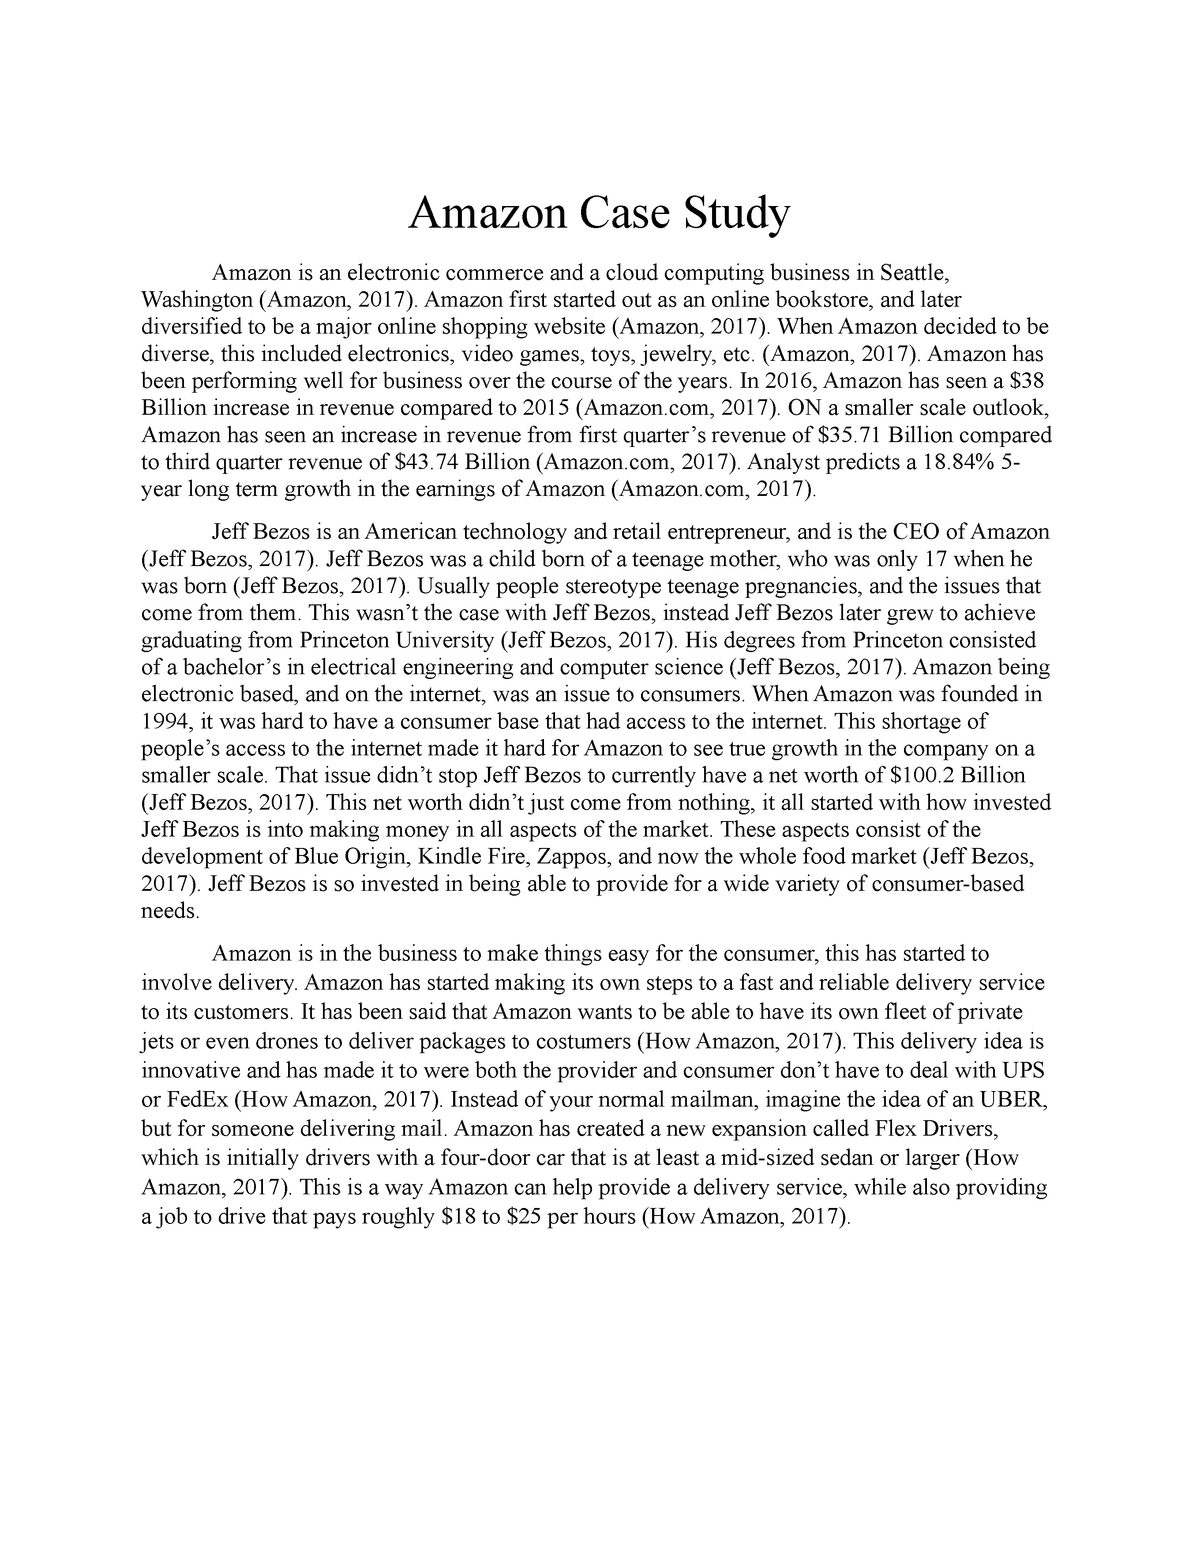 amazon case study answers